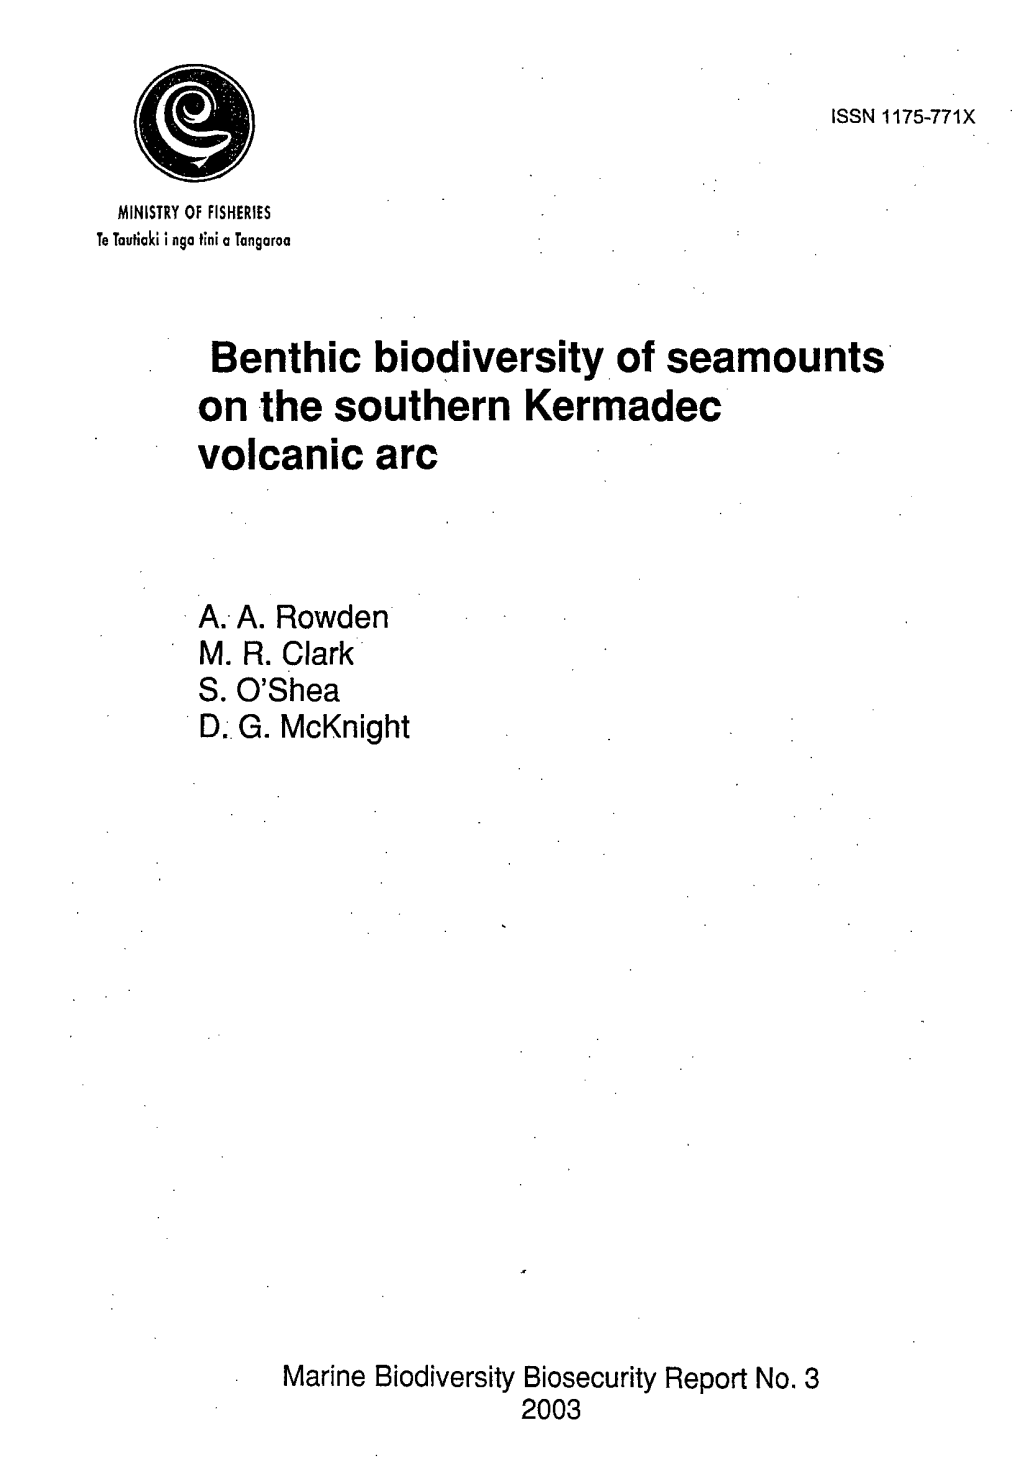 Benthic Biodiversity of Seamounts on the Southern Kermadec Volcanic Arc